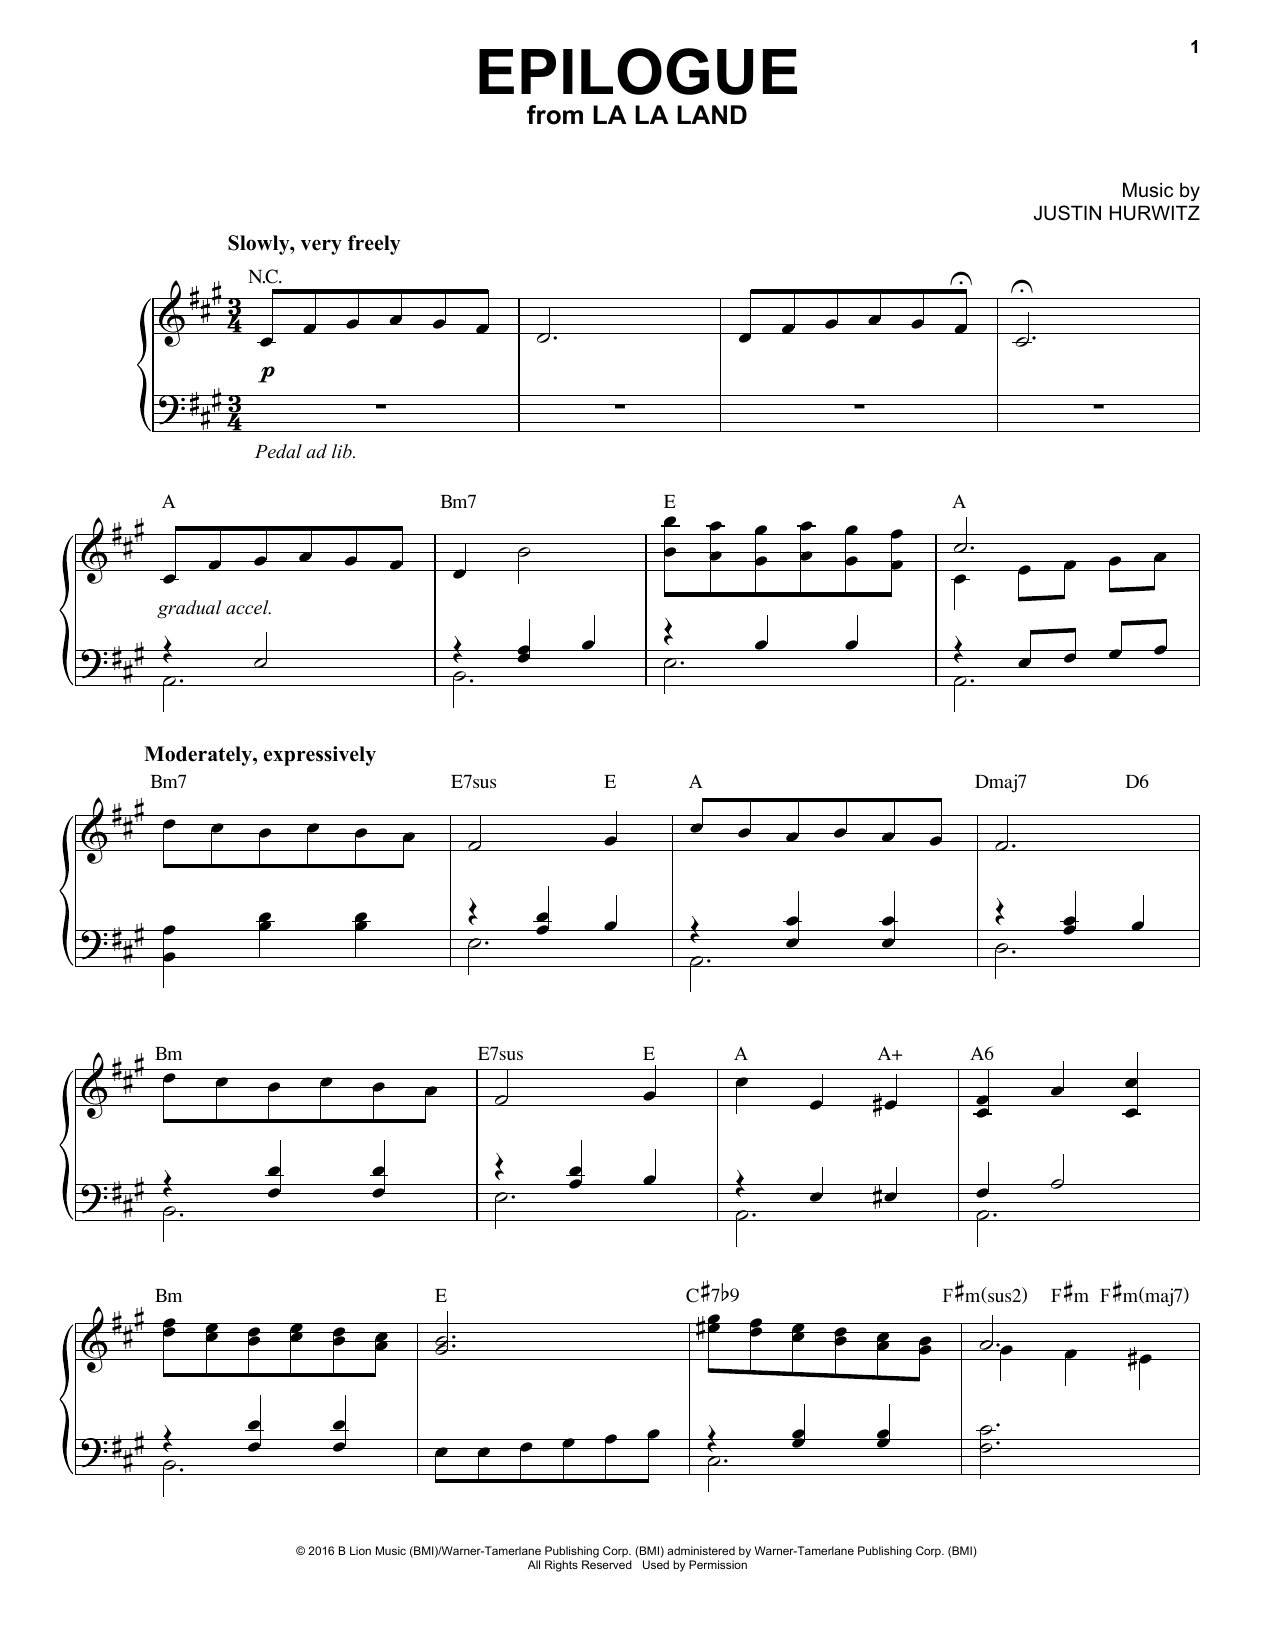 Justin Hurwitz Epilogue Sheet Music Notes & Chords for Easy Guitar Tab - Download or Print PDF